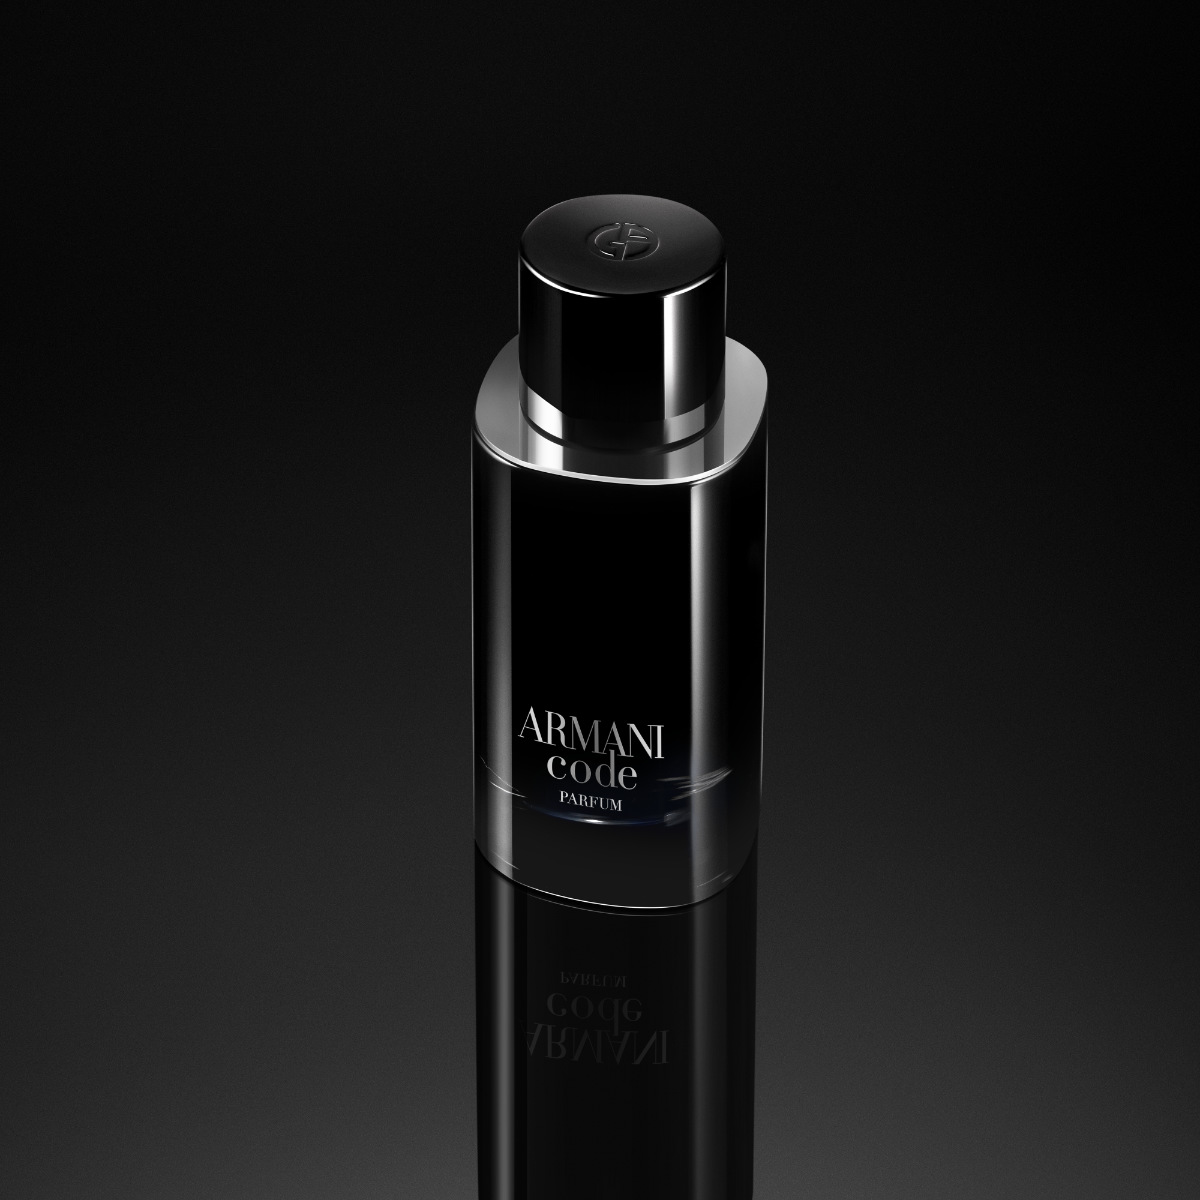  Armani Code Parfum 3